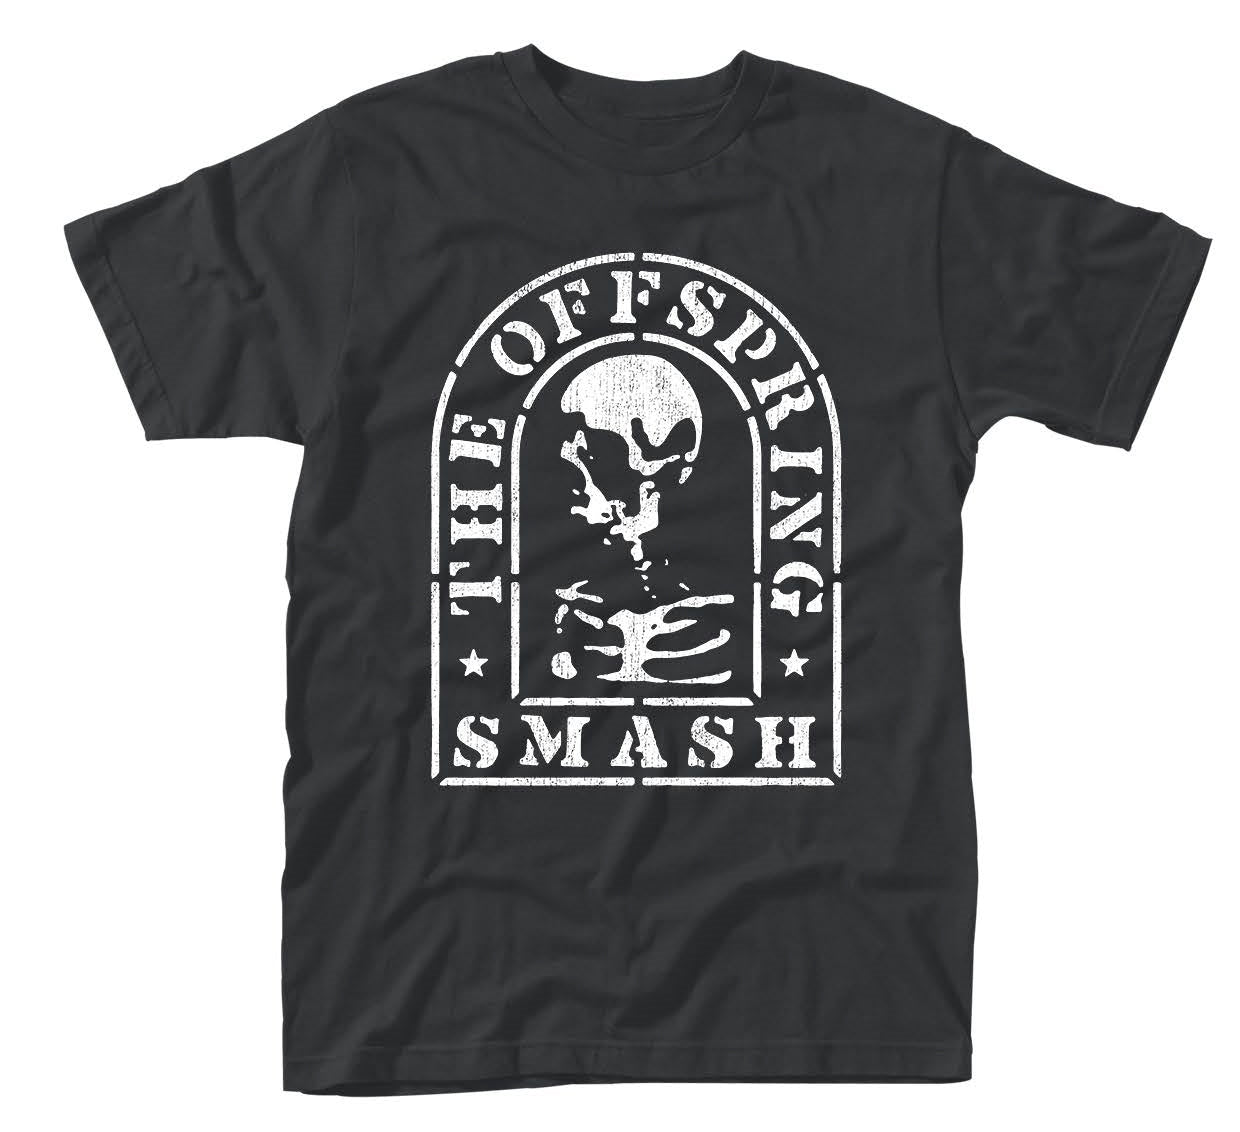 The Offspring "Smash" T shirt